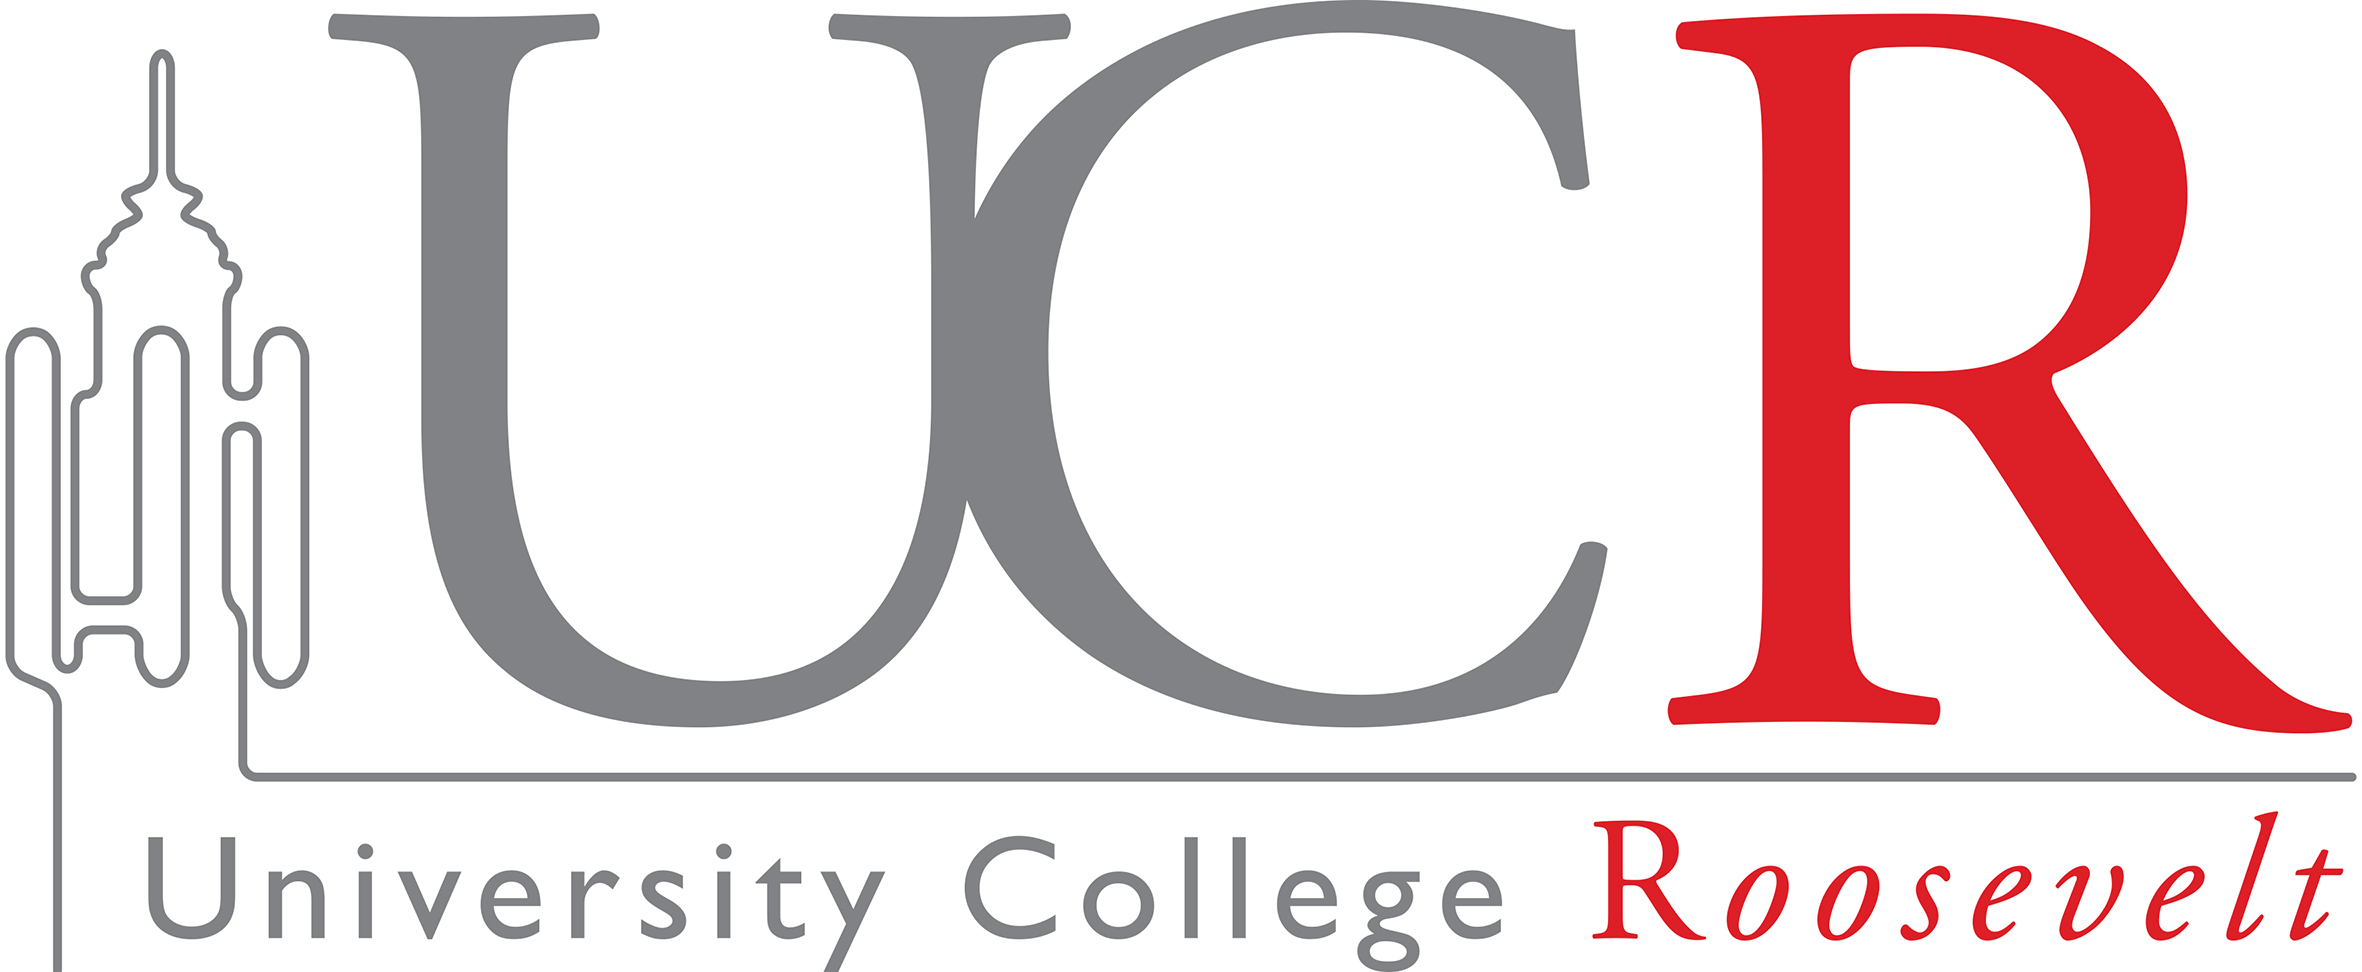 University College Roosevelt (UCR) logo